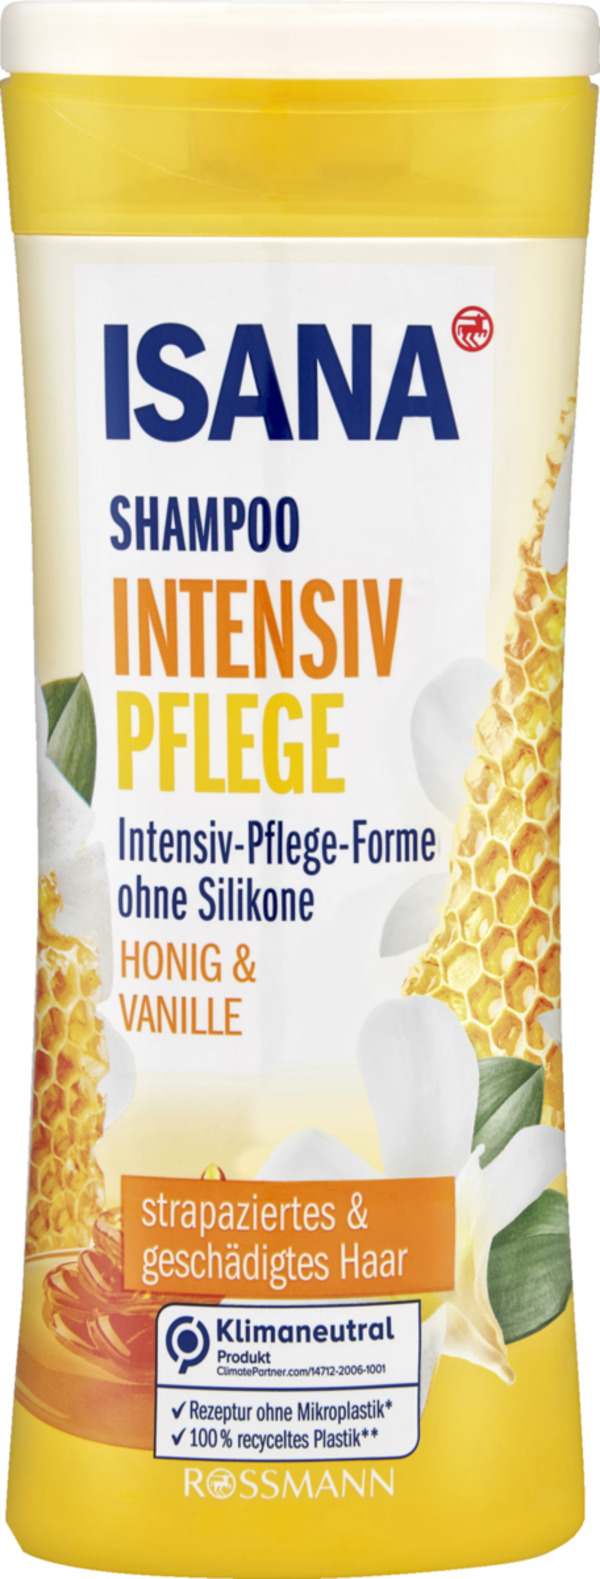 Bild 1 von ISANA Shampoo Intensiv-Pflege 1.67 EUR/1 l